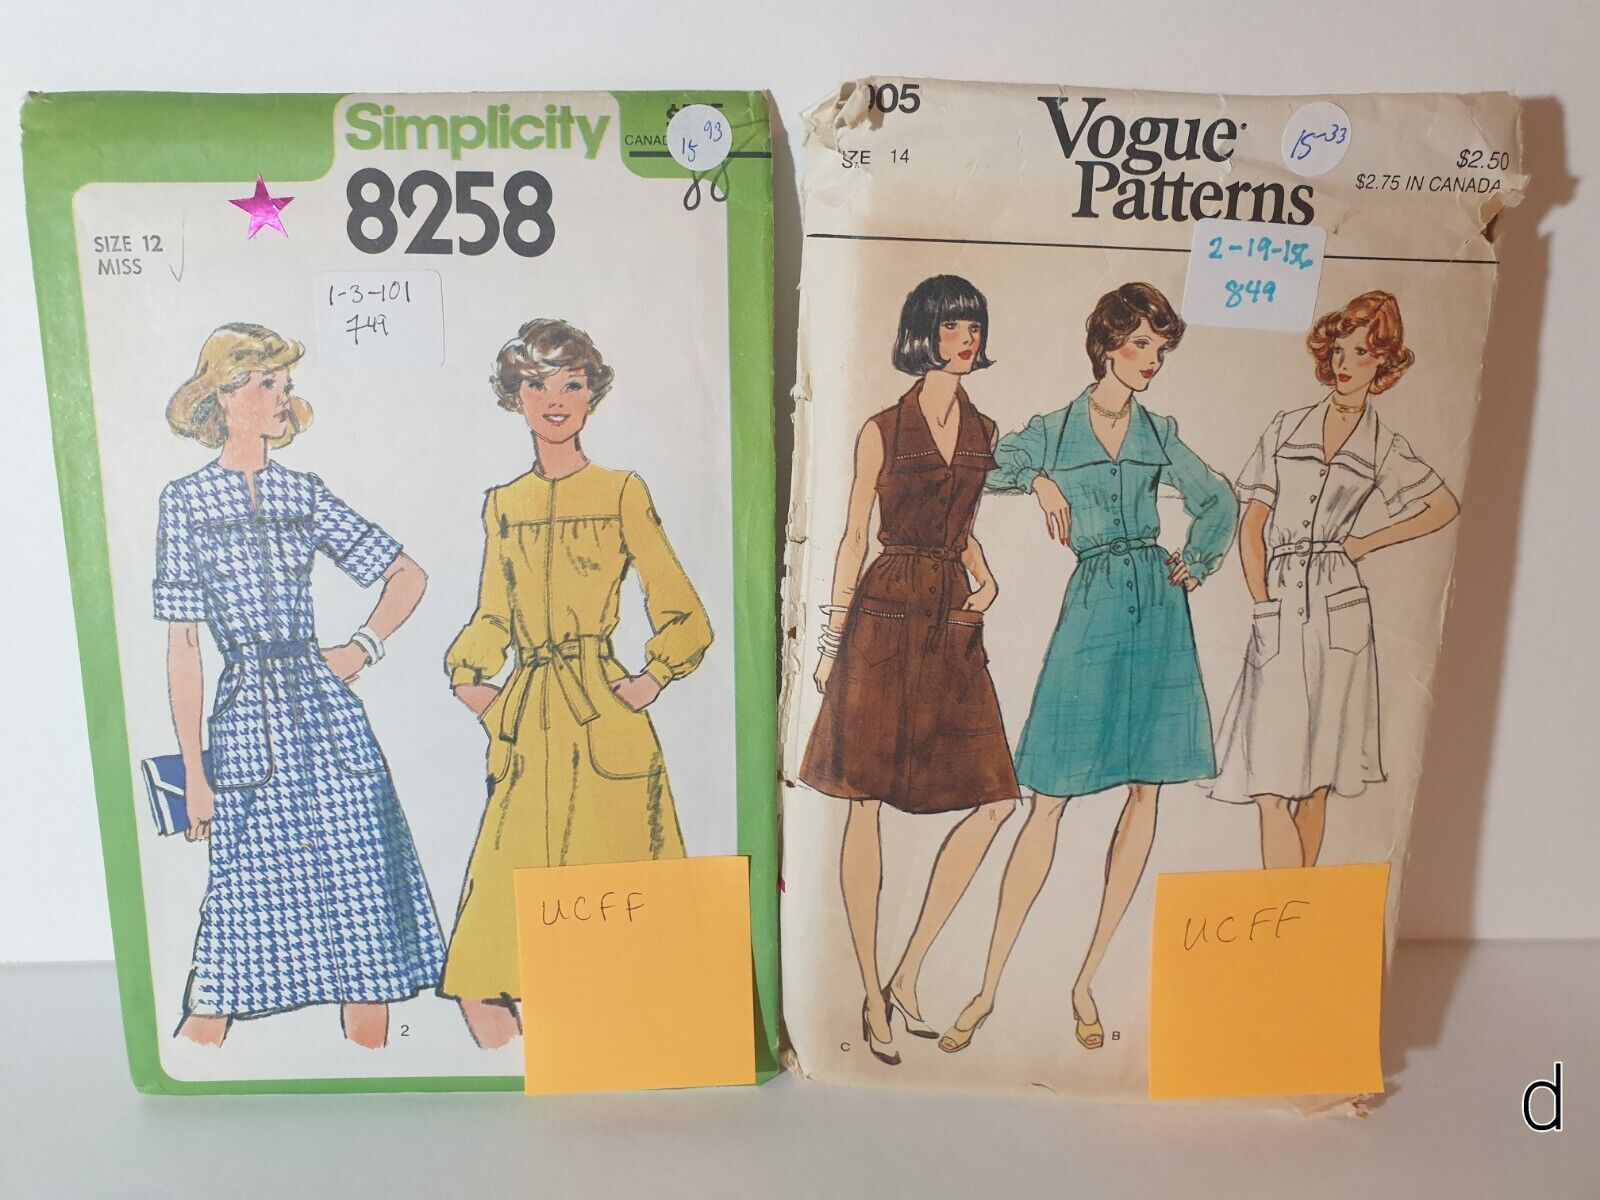 Lot of 2 Vintage 1970s Dresses Sewing Patterns UCFF: Vogue 8905, Simplicity 8258